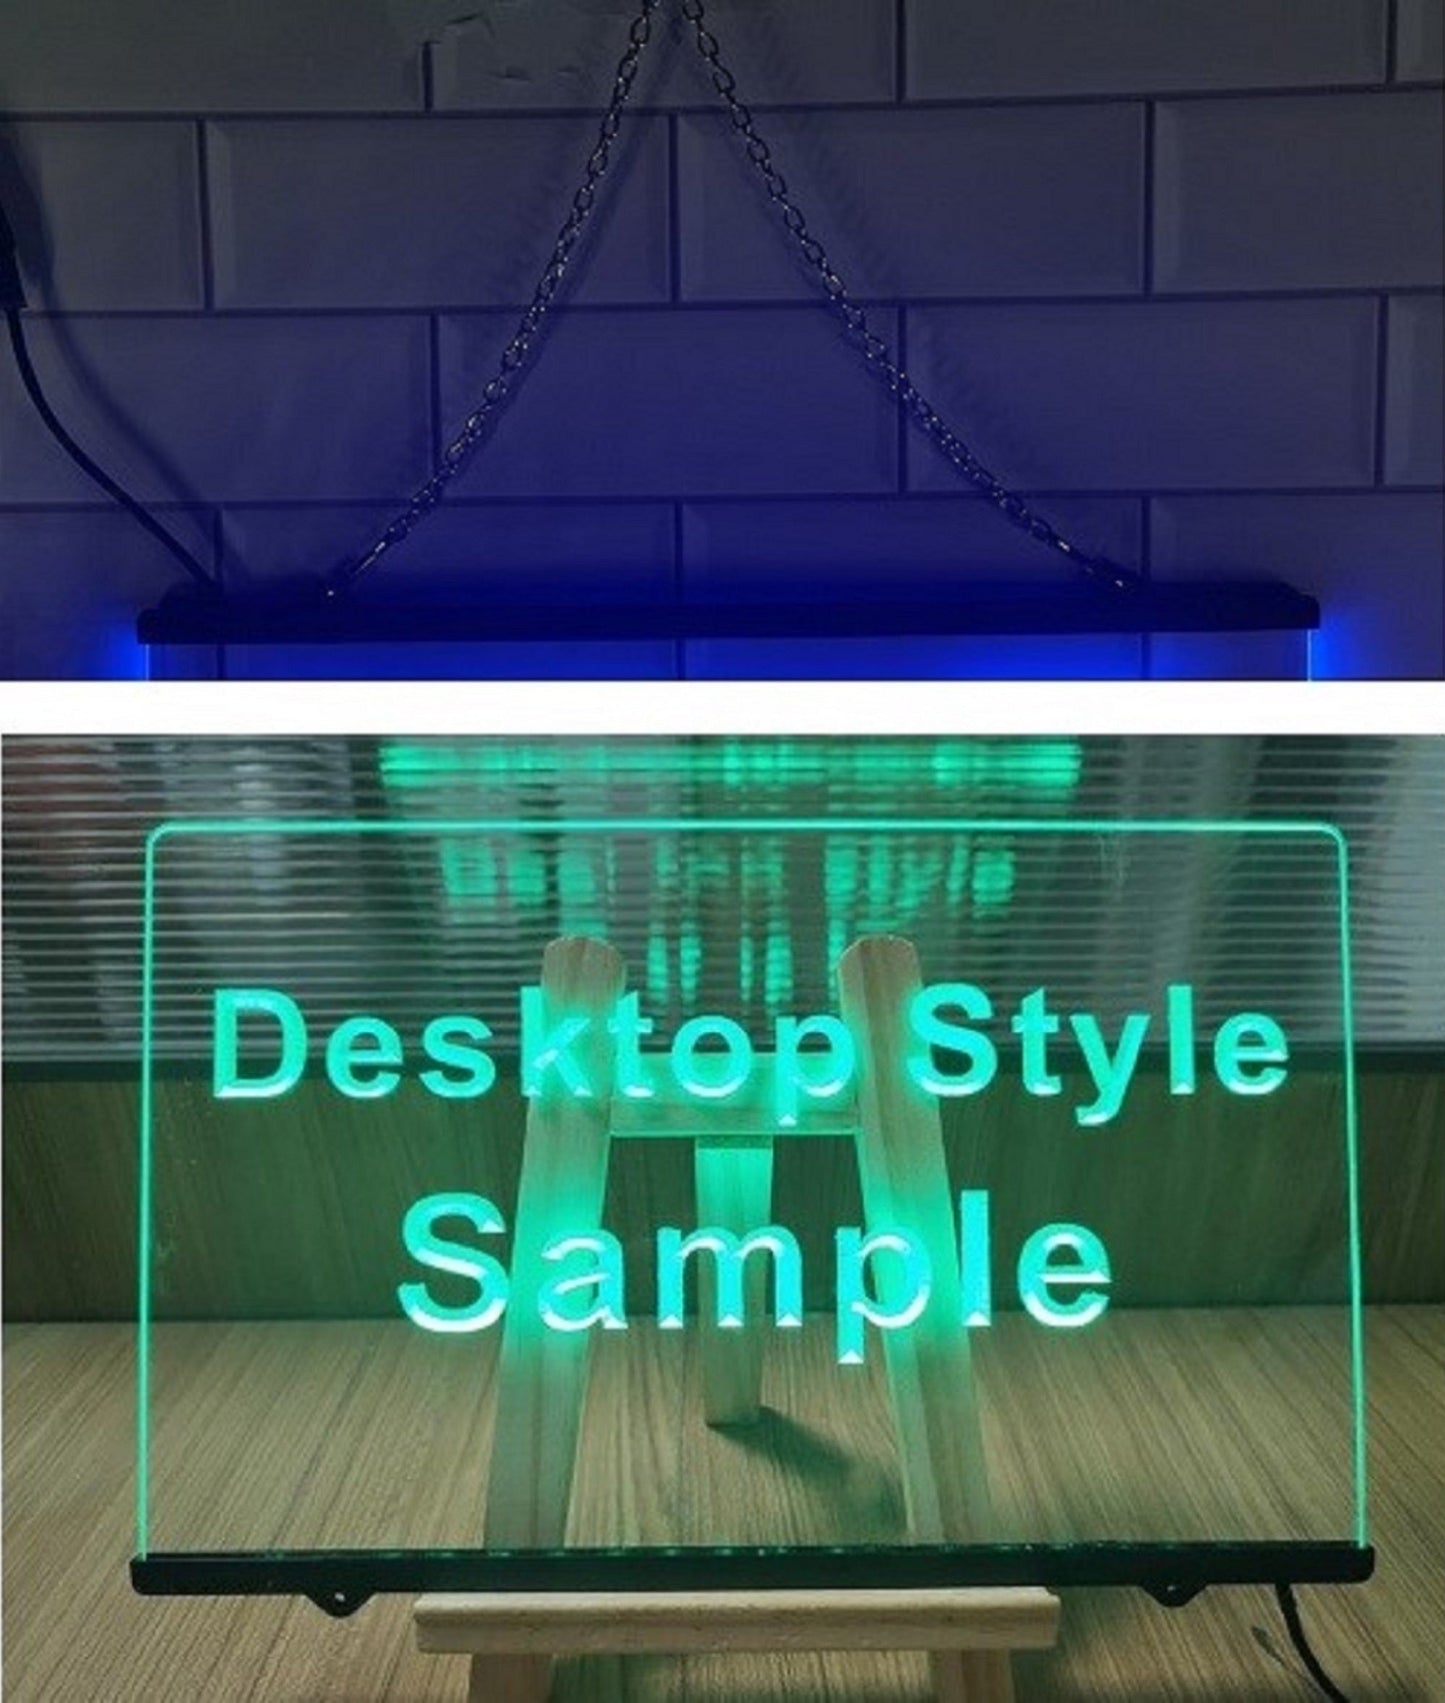 Neon Sign Dual Color Guitar Let's Rock And Roll Home Studio Wall Desktop Decor